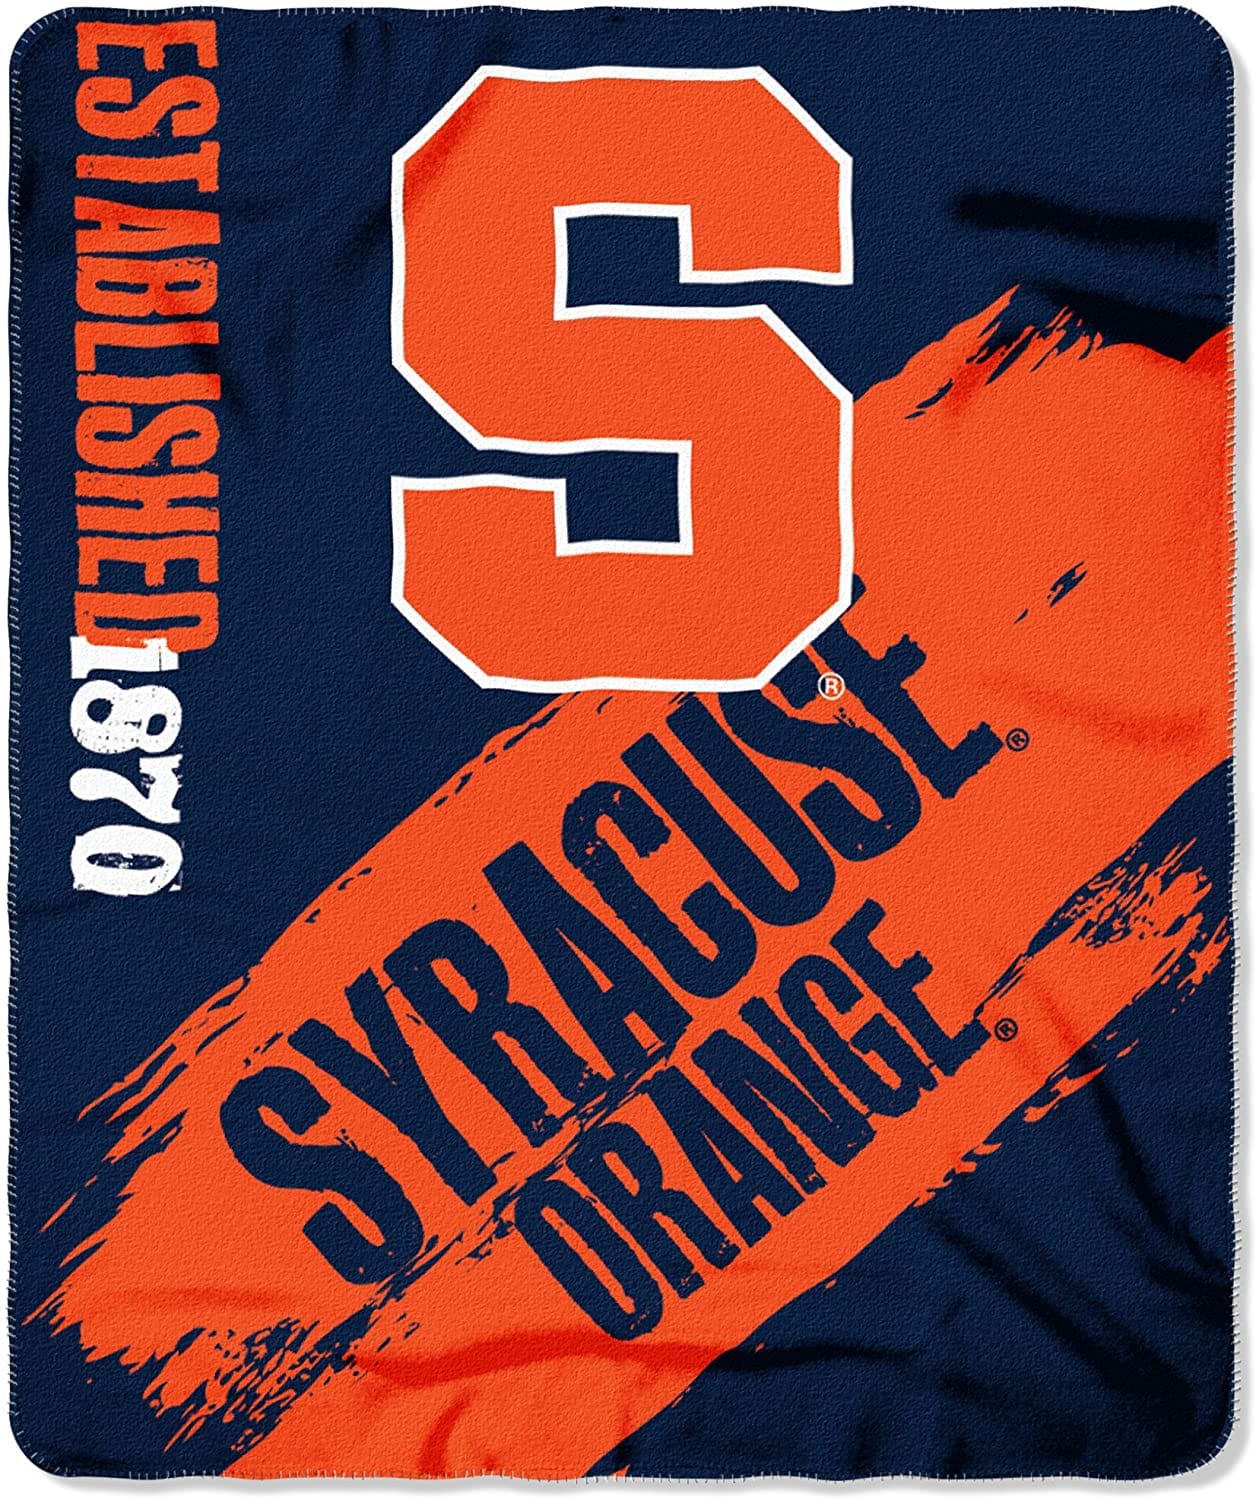 Officially Licensed Ncaa Printed Throw Syracuse Orange Fleece Blanket